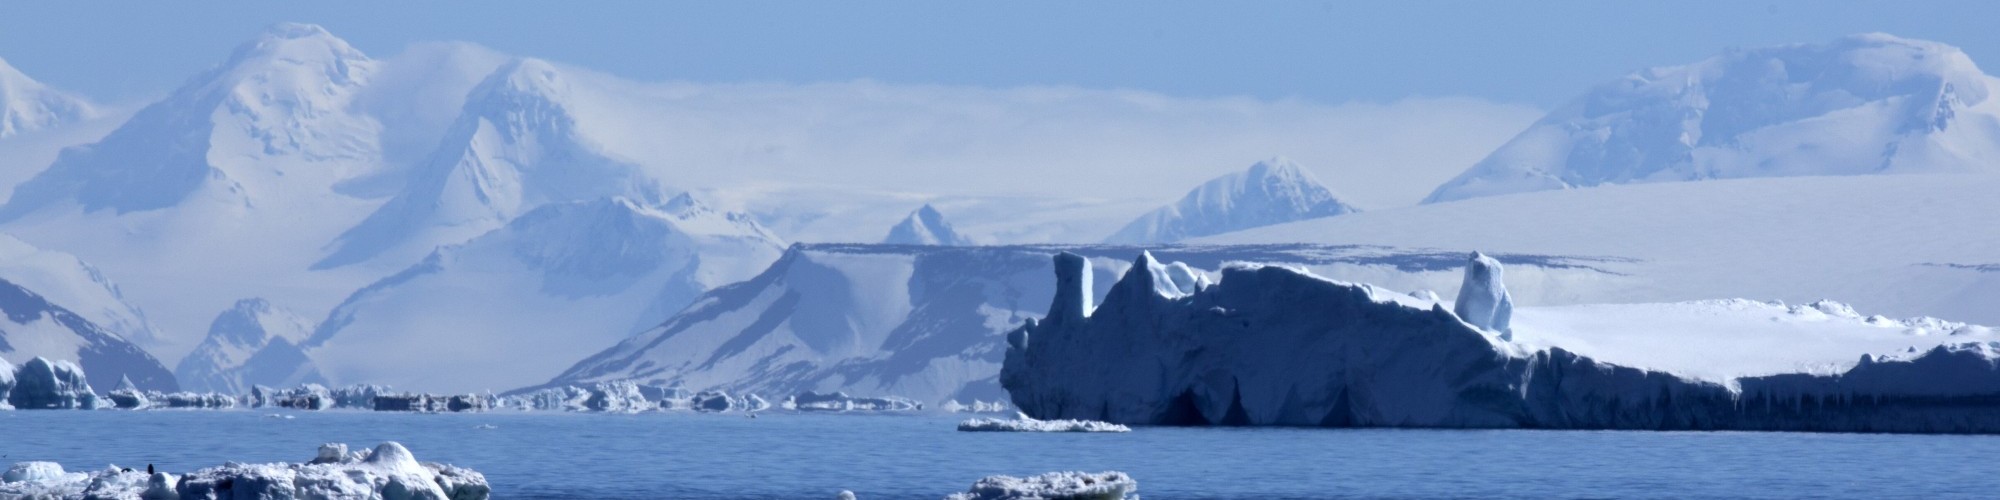 Antarctica - Wedell Sea - Oceanwide - Iceberg scenery by Wim van Passel